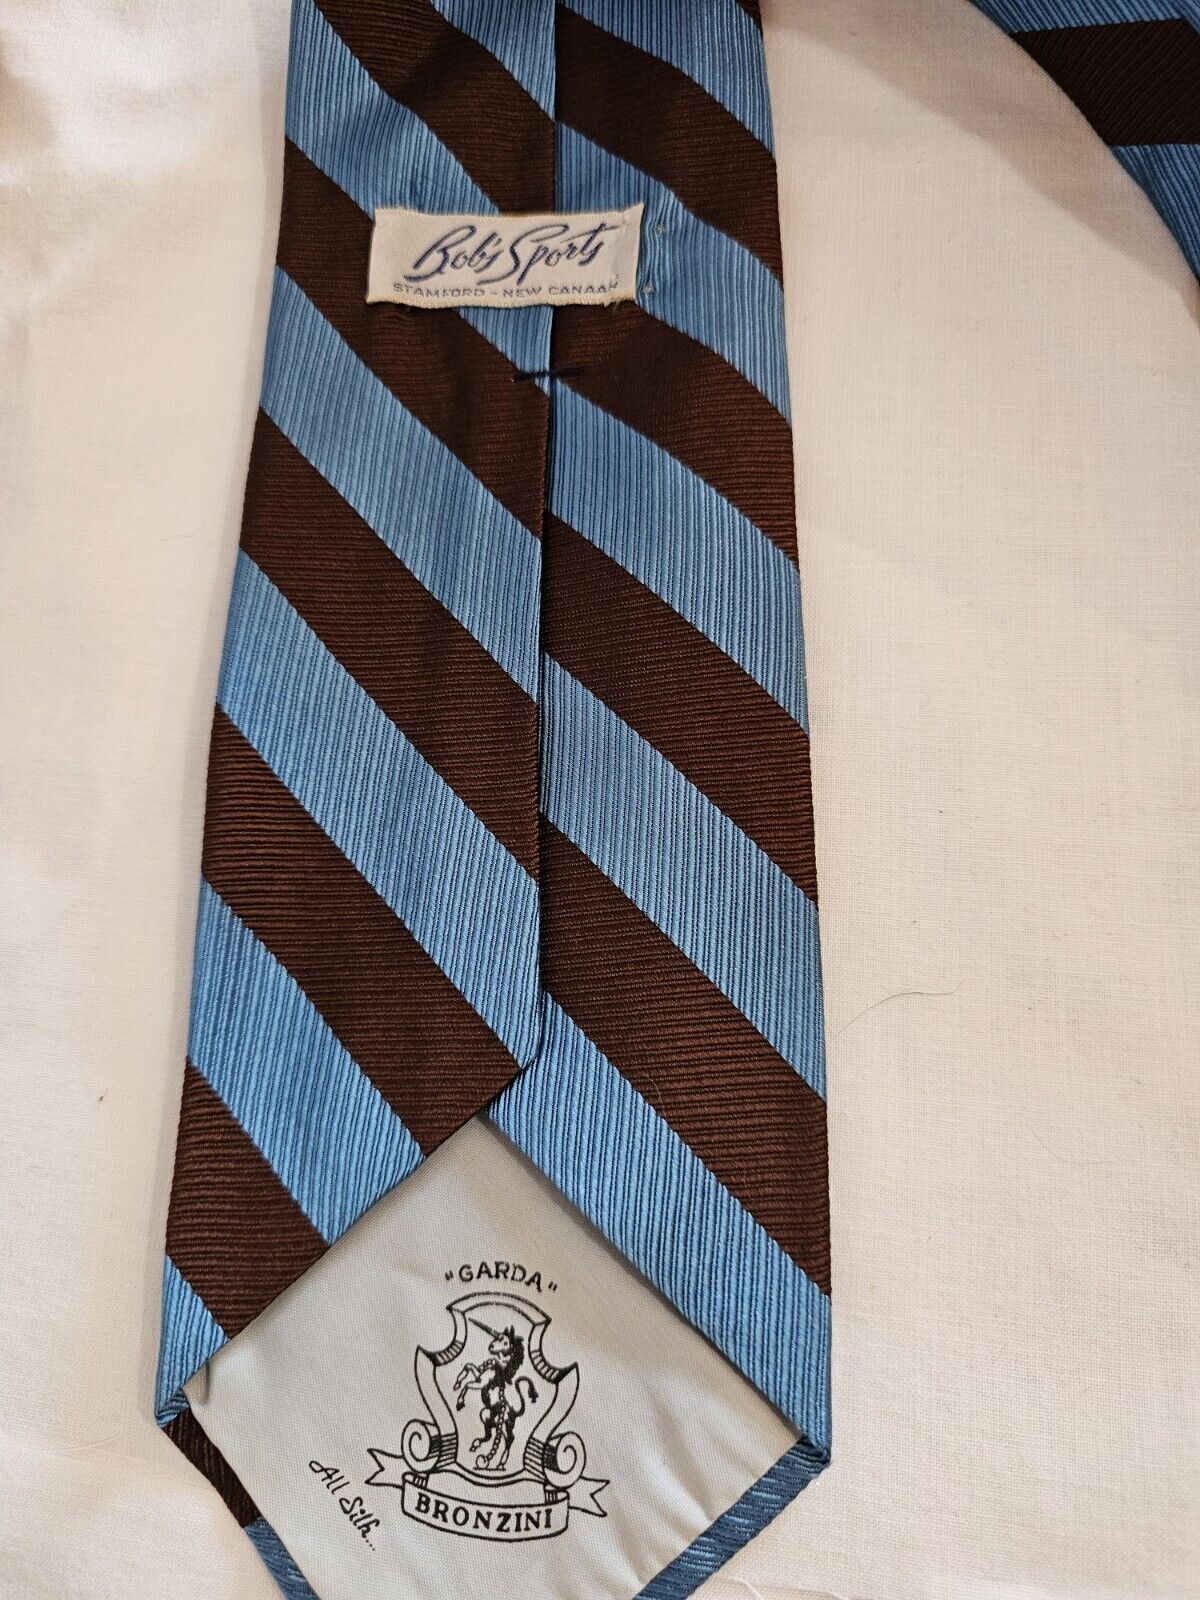 Vintage Men's Ties Lot of 9 Designer 100% Silk, Stripe, Pierre Cardin, Dnky